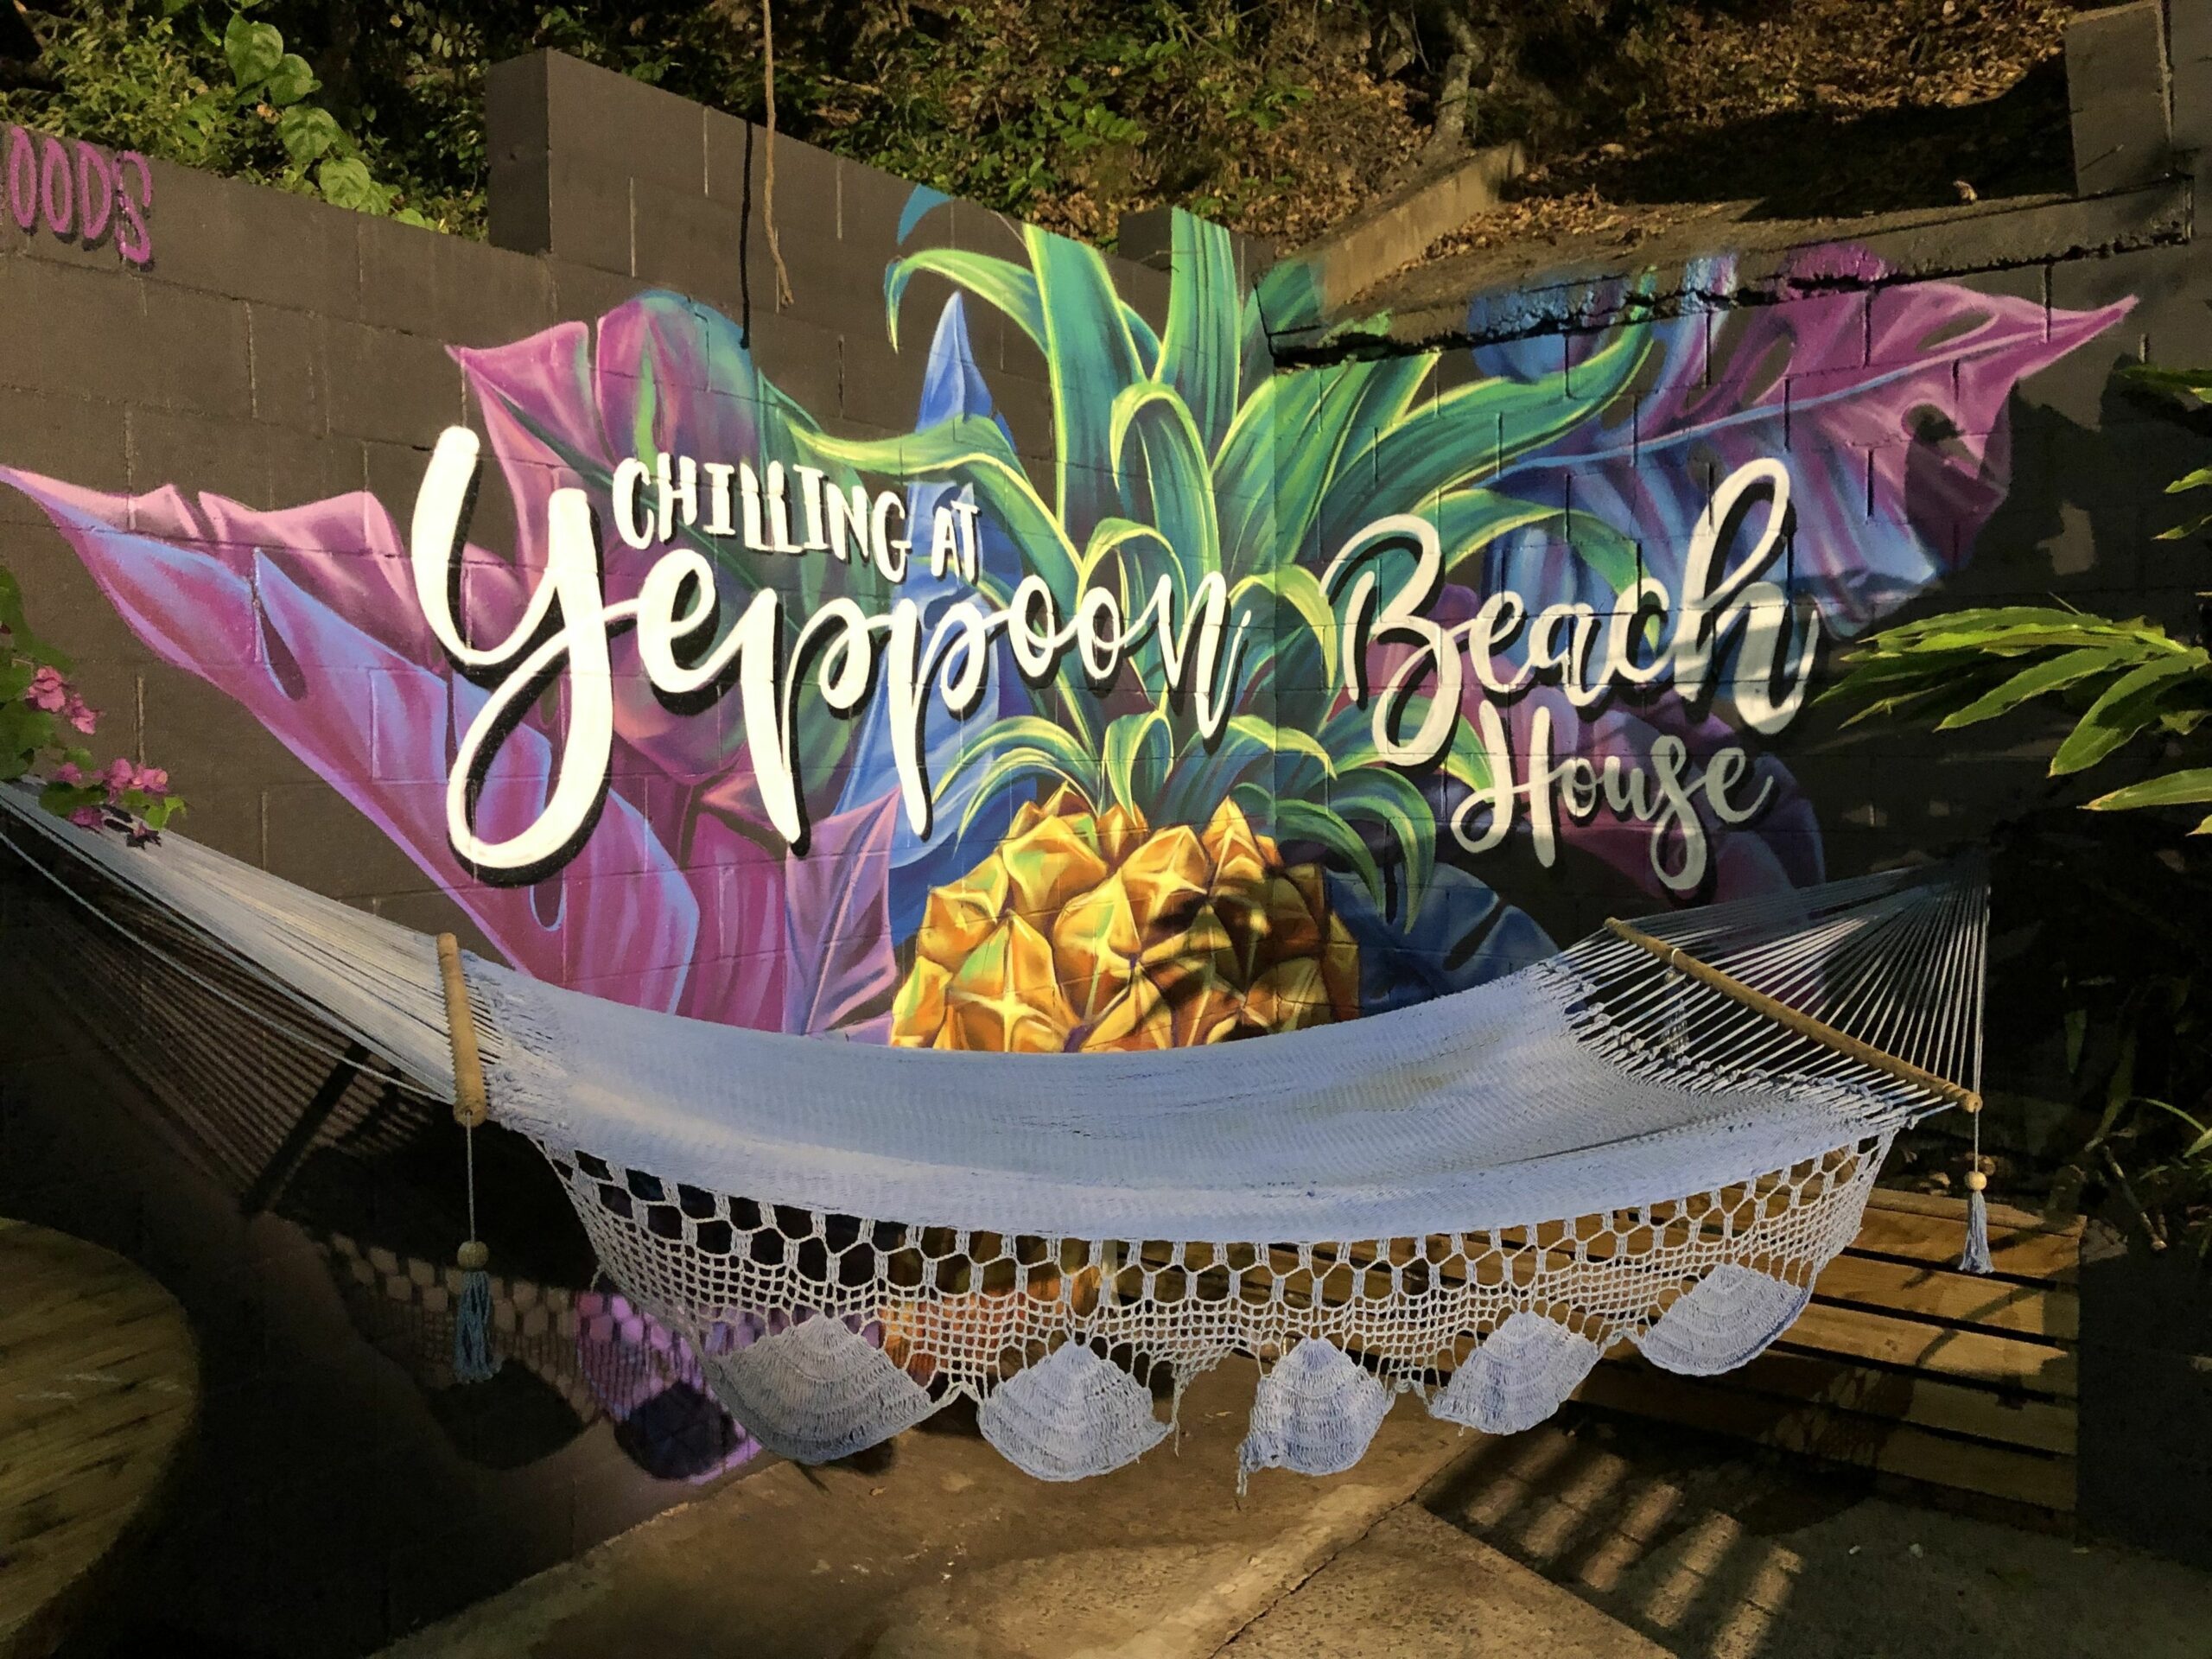 Yeppoon Beachhouse - Hostel